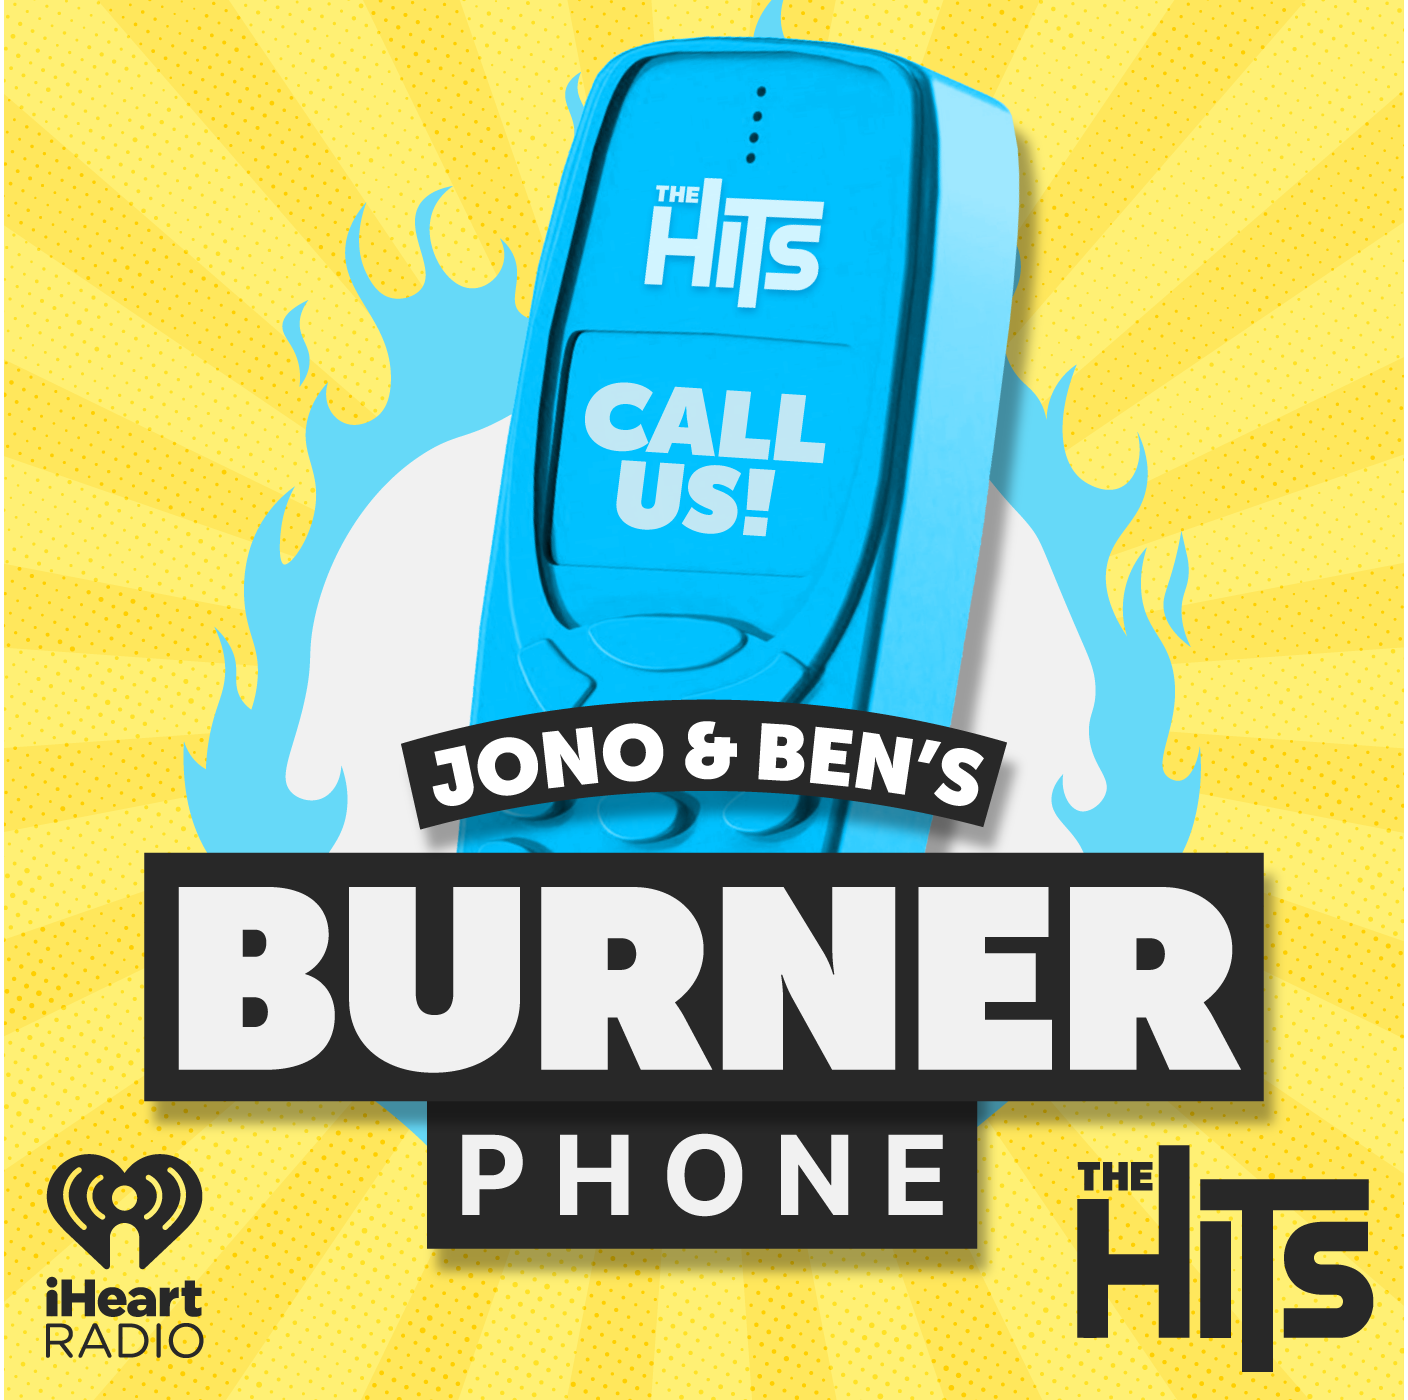 The Burner Phone 29: Jono Scored A Super Rugby Try!